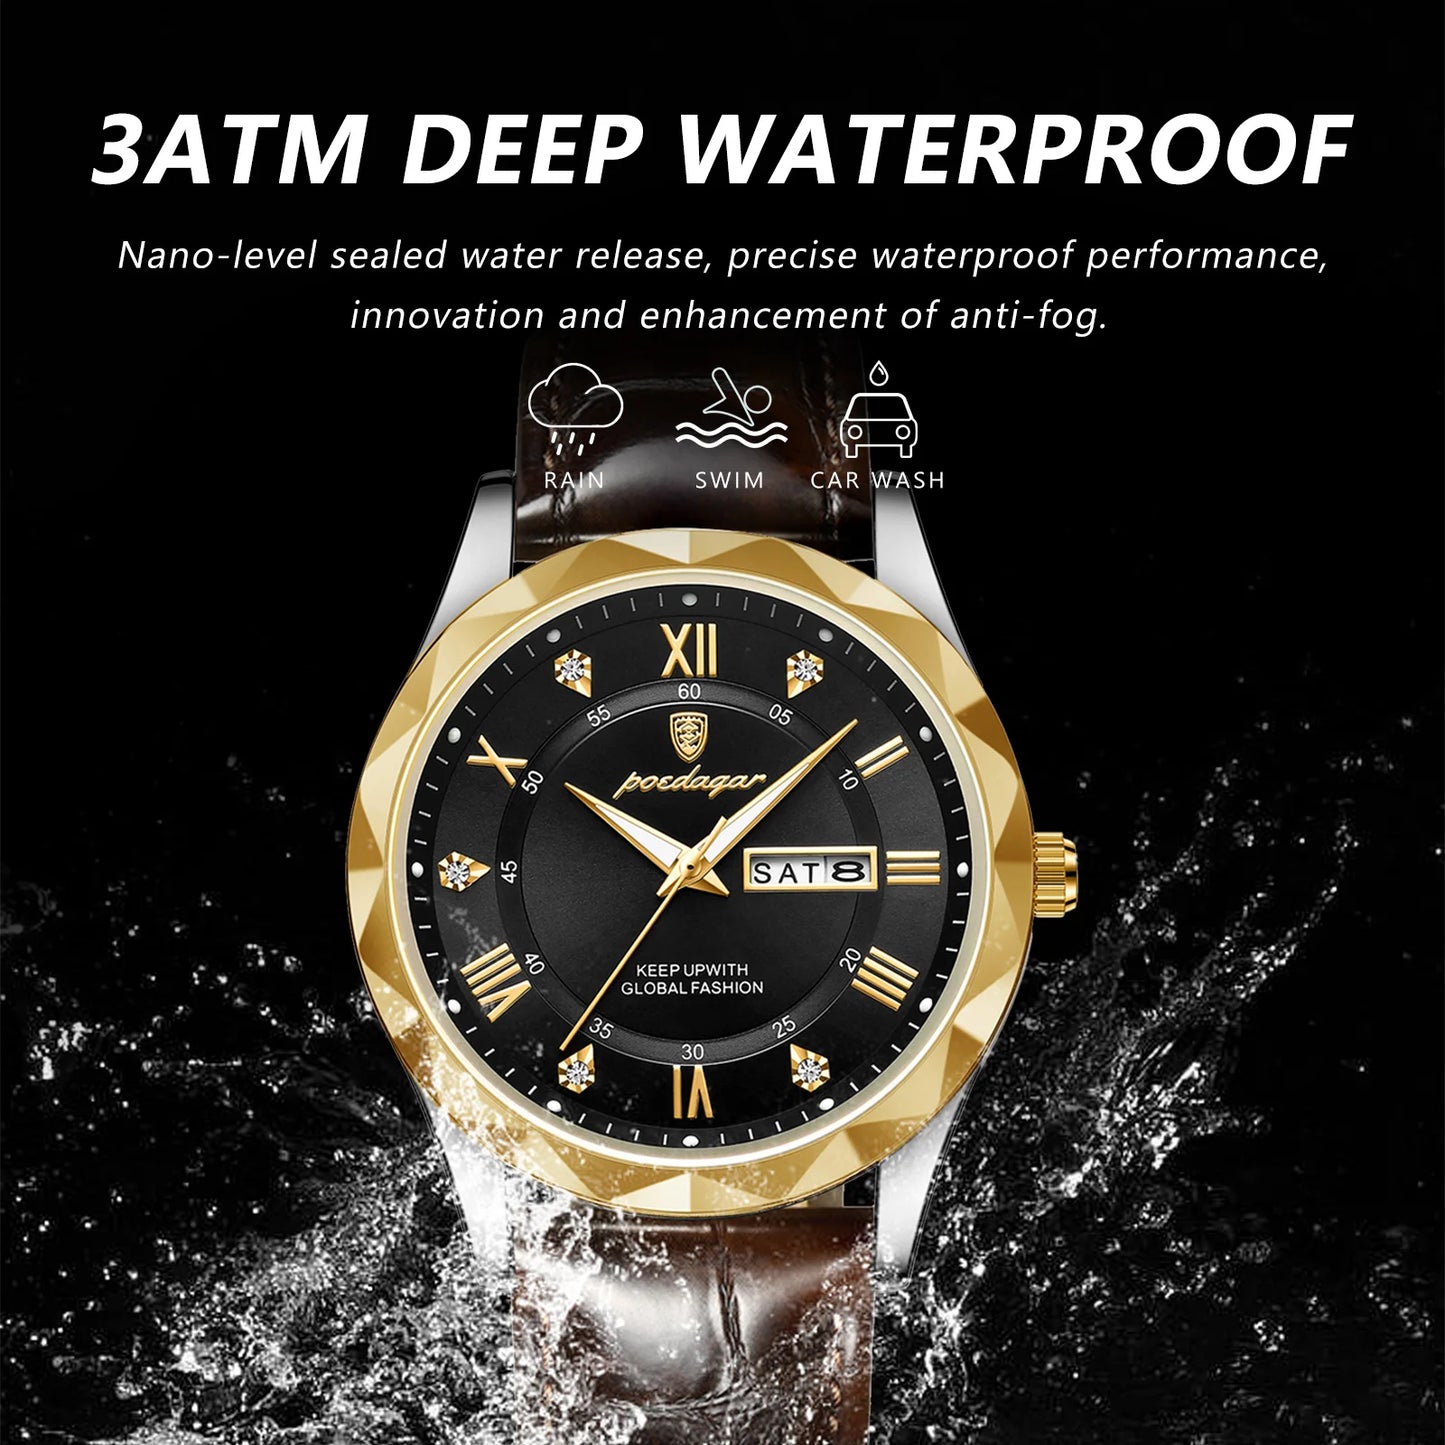 Luxury Businessman's Wristwatch: Waterproof, Luminous, Date and Week Display, Quartz Clock, Leather Men's Watch